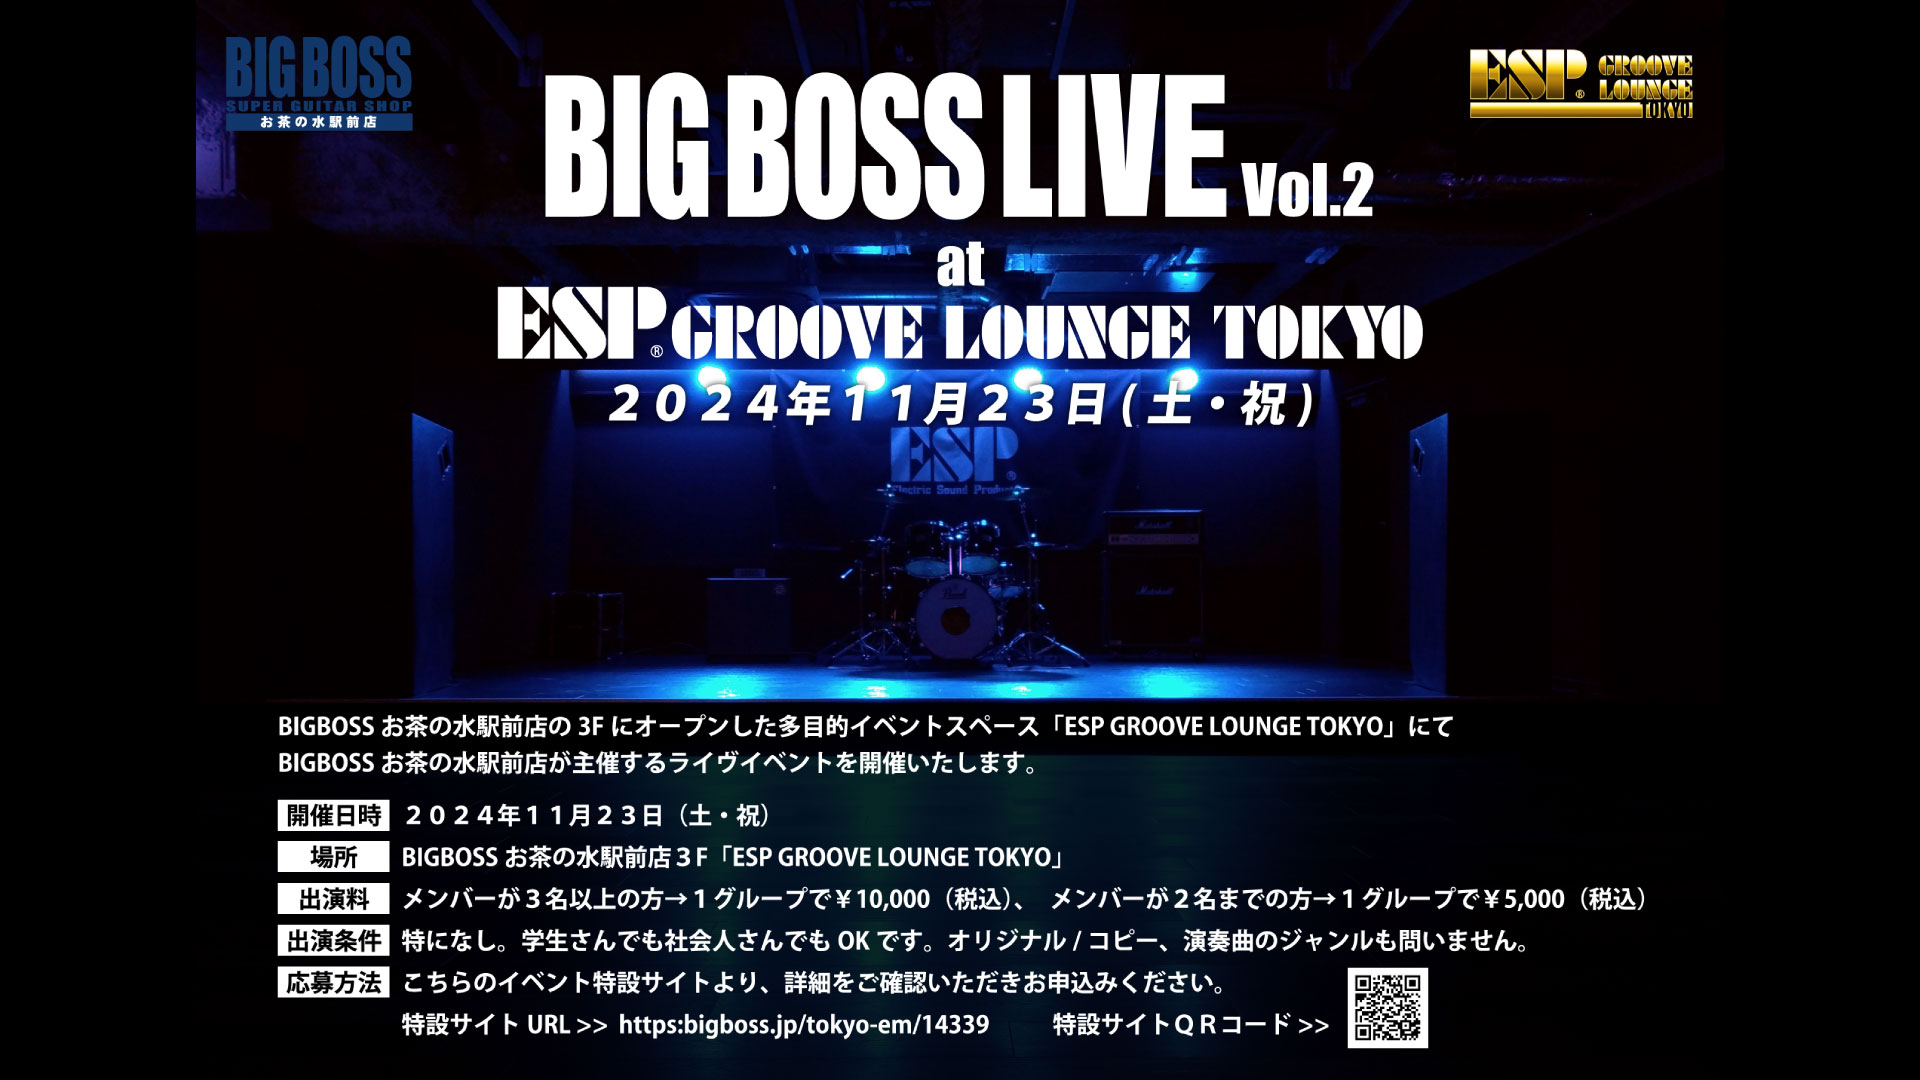 BIGBOSS LIVE Vol.2